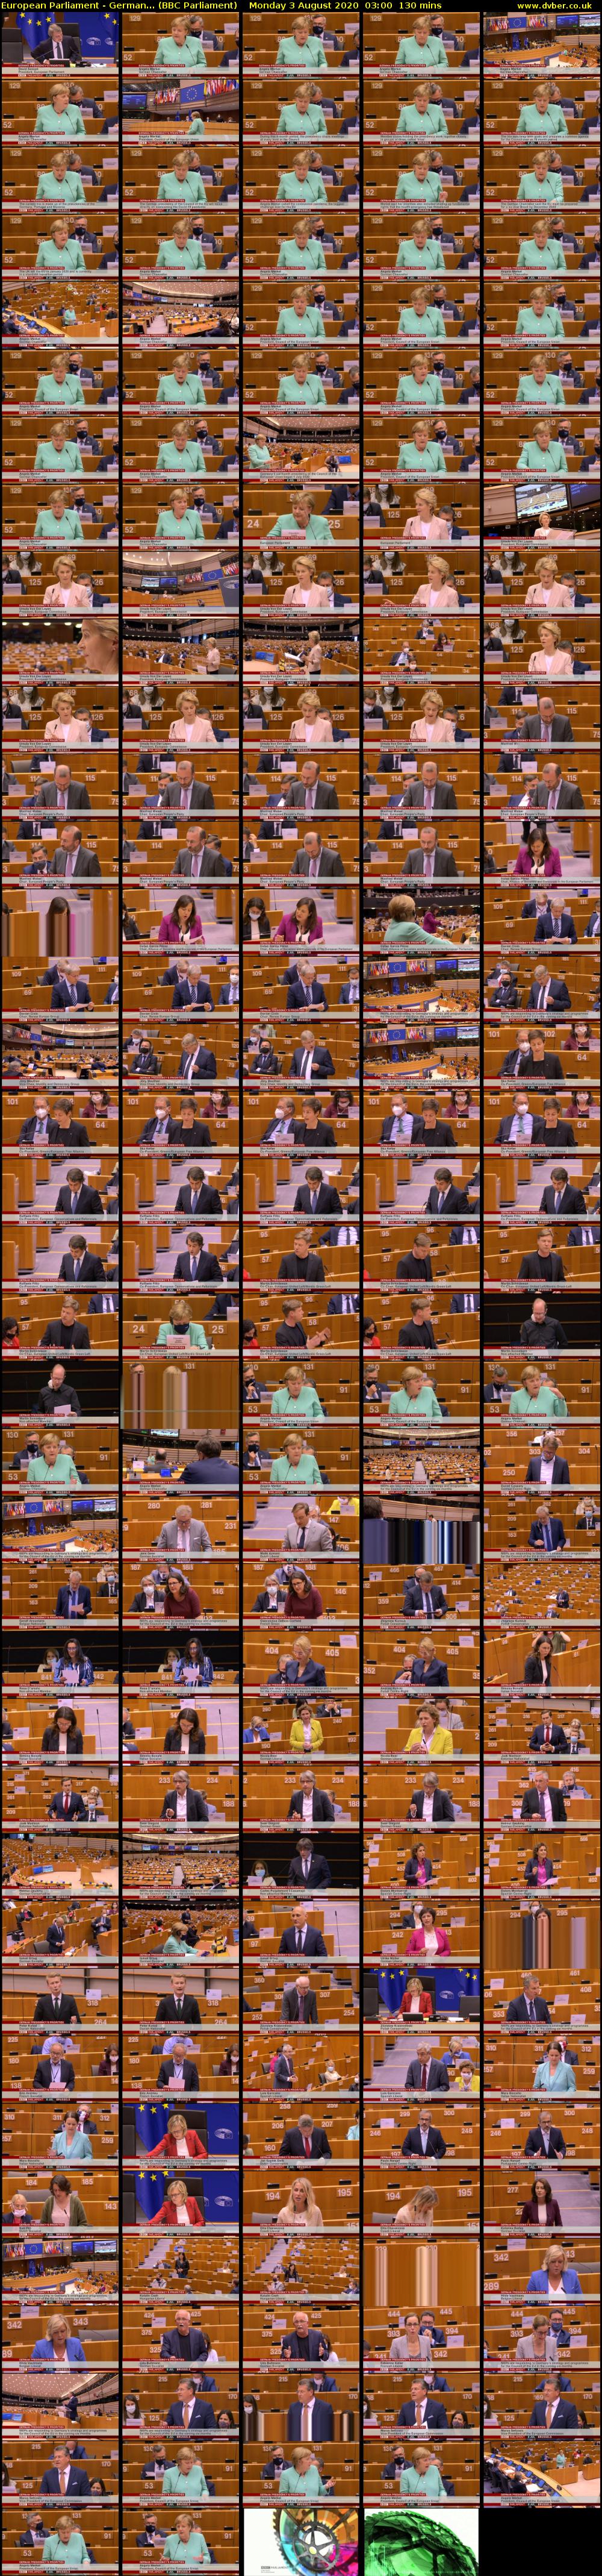 European Parliament - German... (BBC Parliament) Monday 3 August 2020 03:00 - 05:10